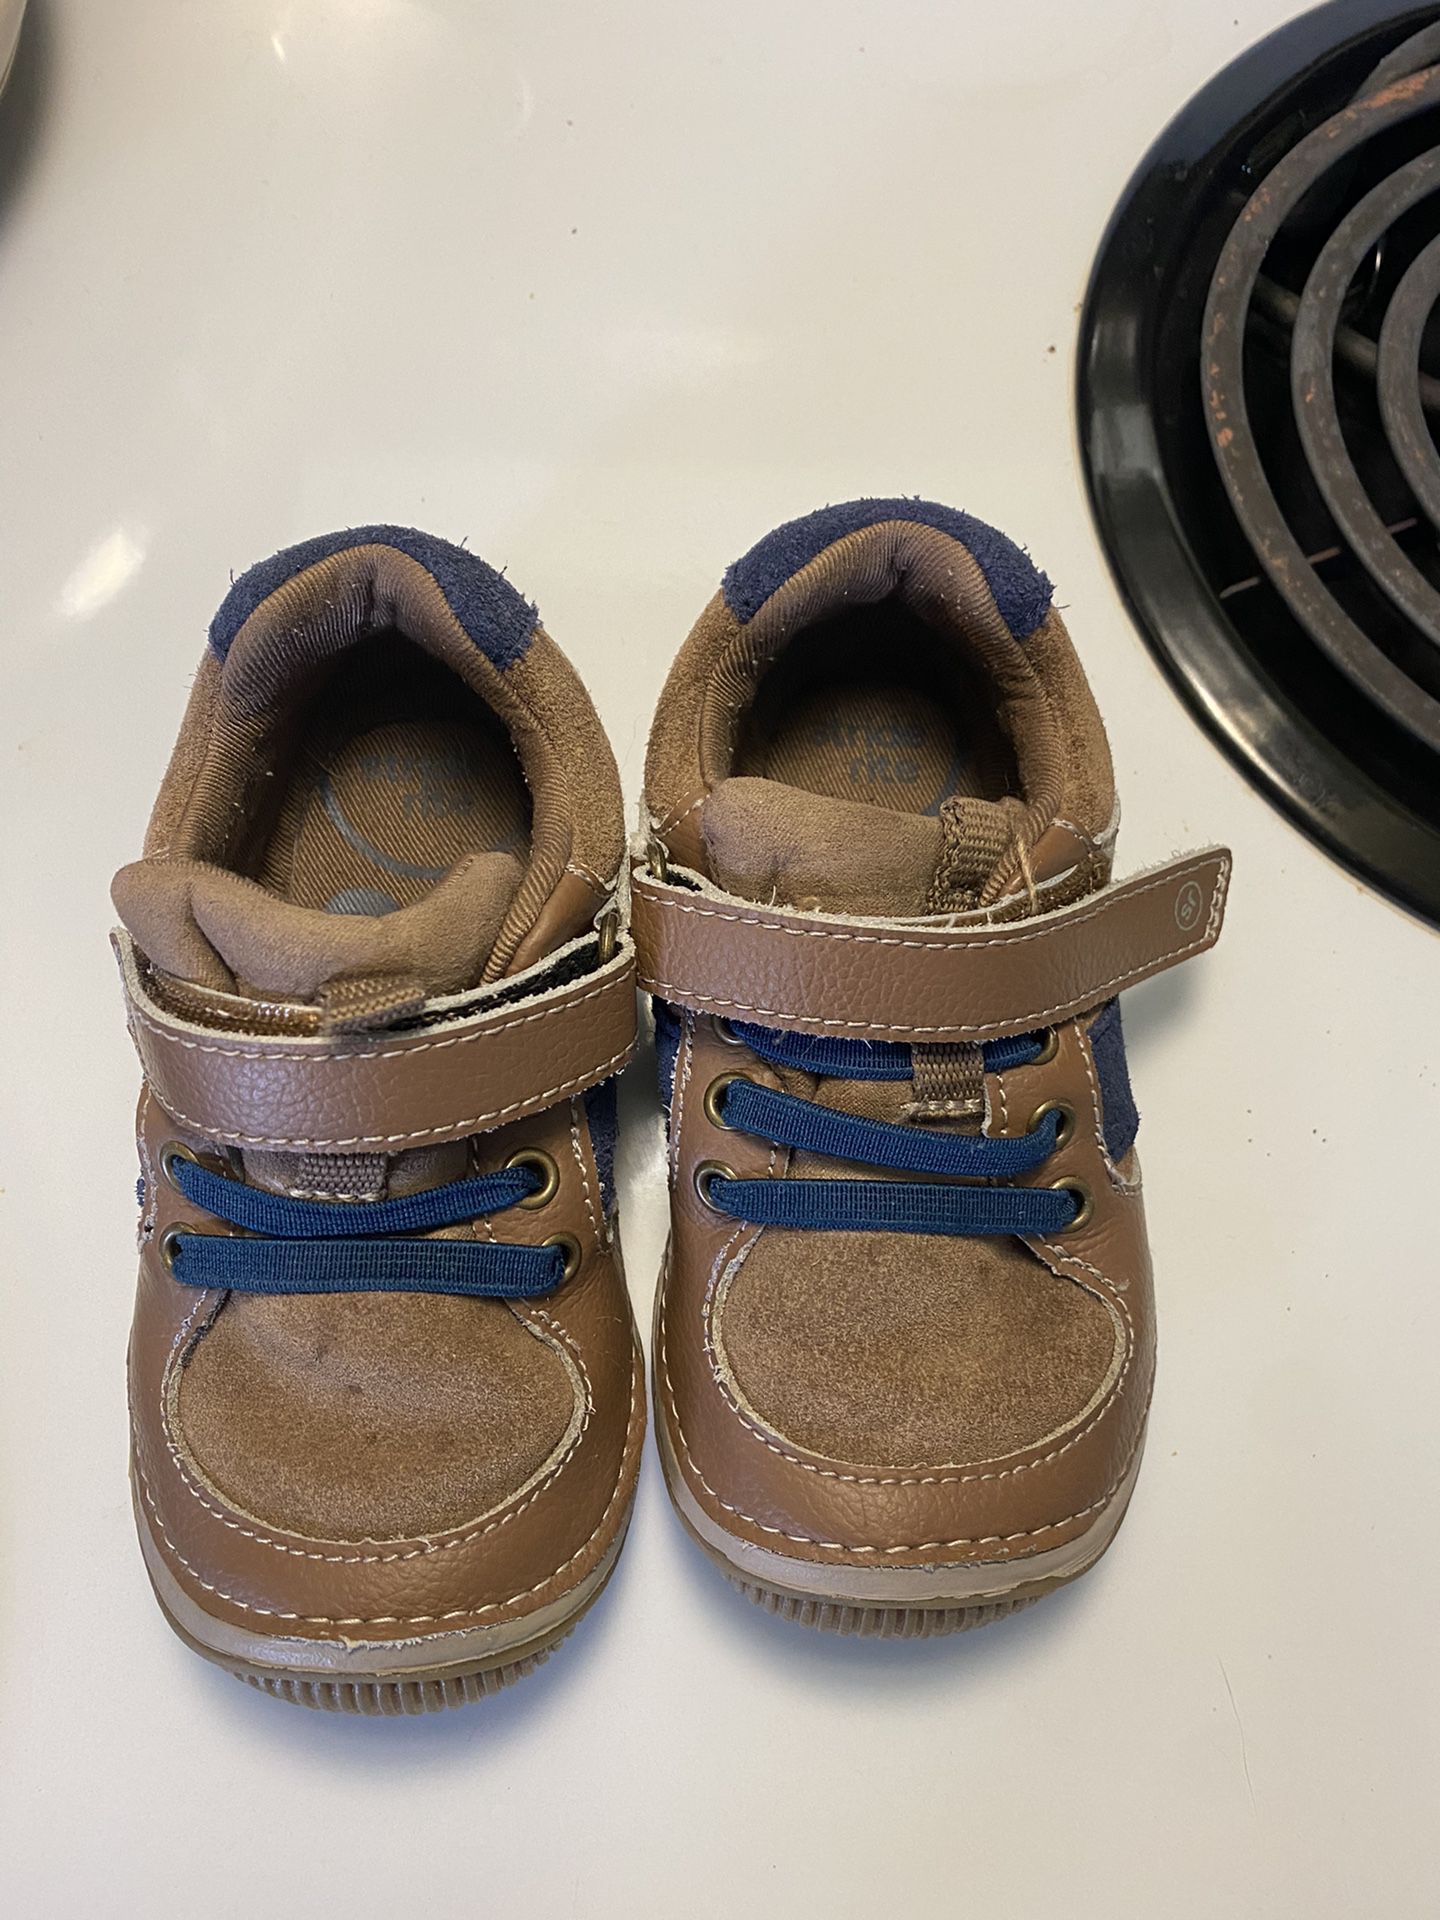 Toddler Boy’s Stride Rite Sneakers 7w